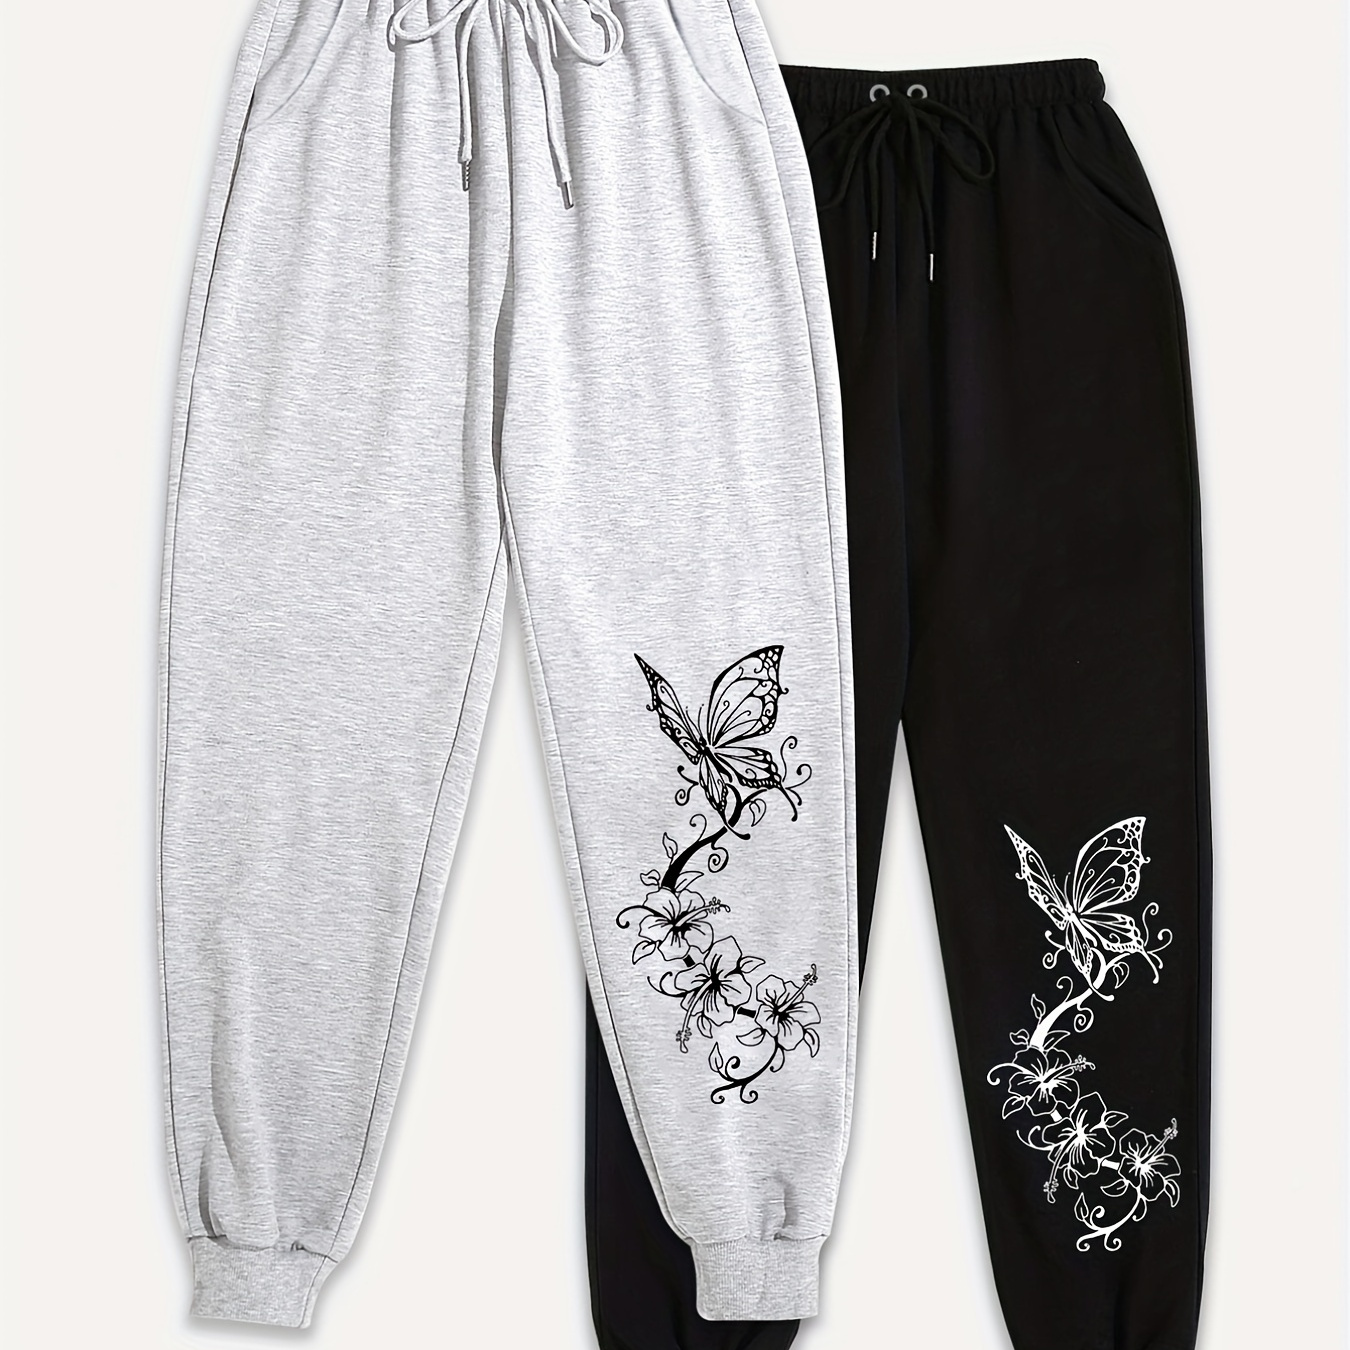 

Flower & Butterfly Print Sweatpants 2 Pack, Drawstring Waist Comfy Versatile Jogger Pants, Women's Clothing